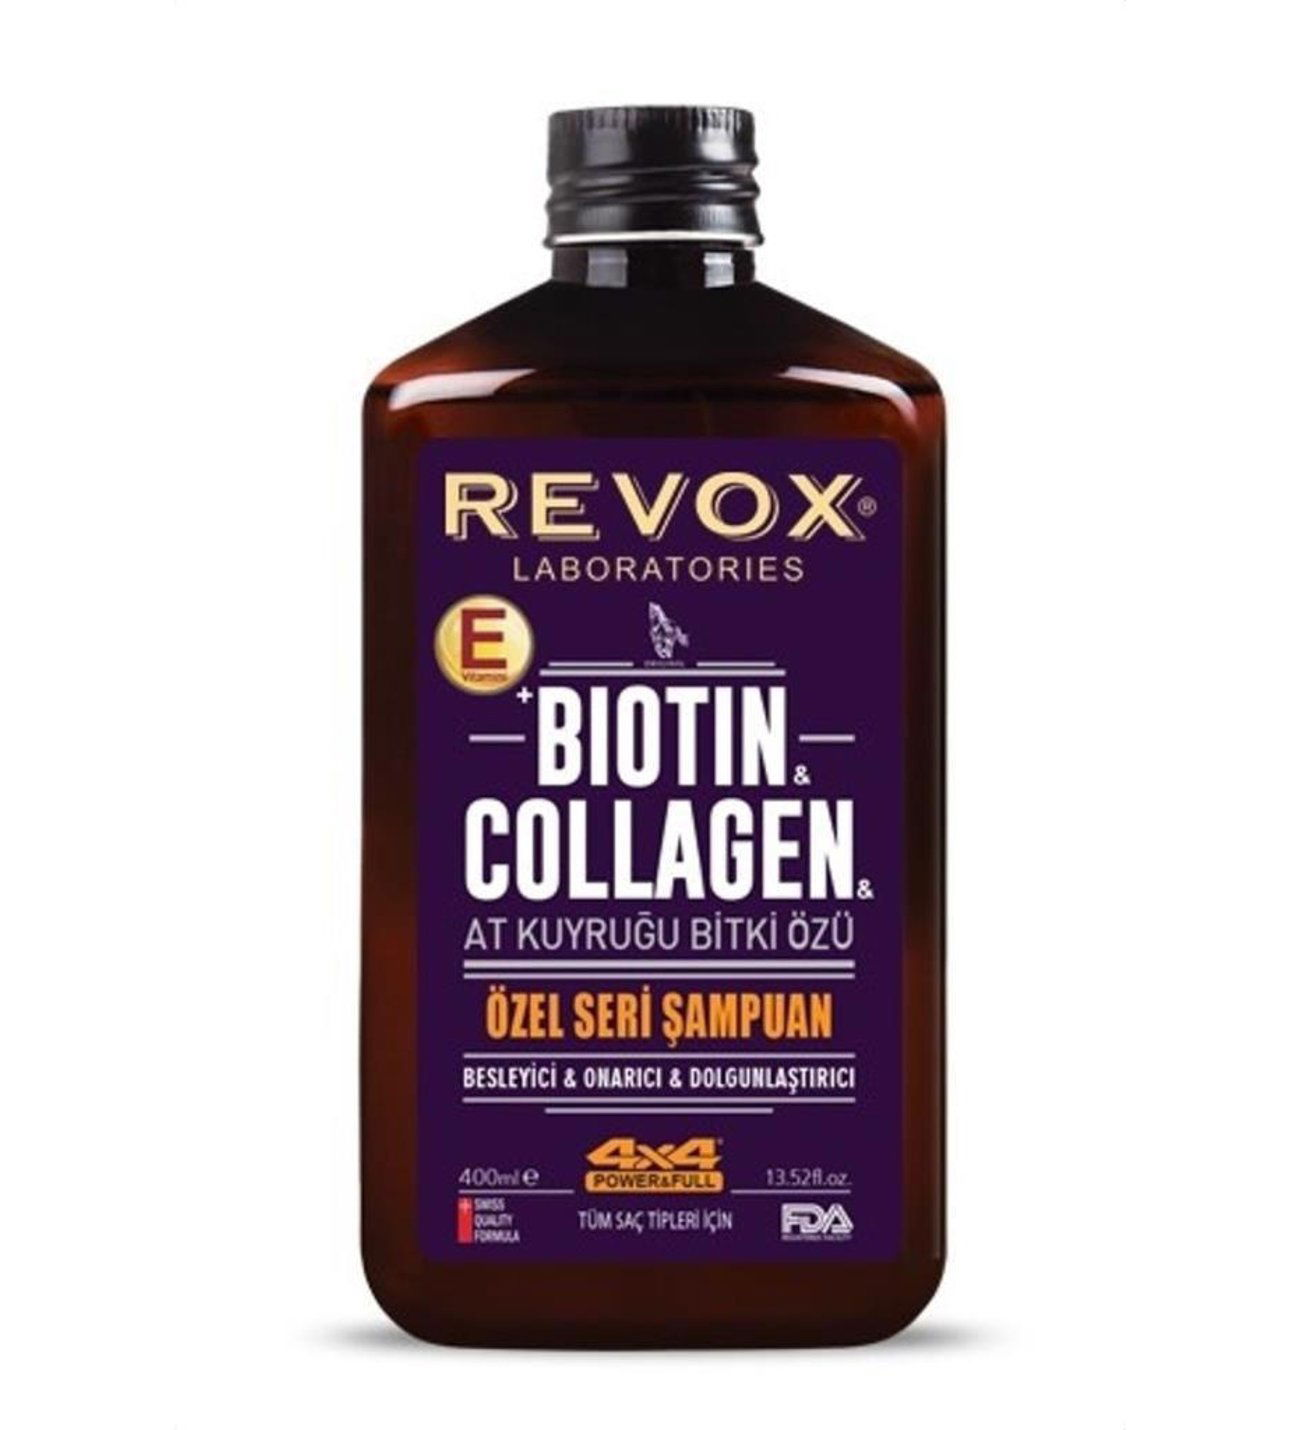 Revox At Kuyruğu Biotin Collagen Şampuan kapak resmi